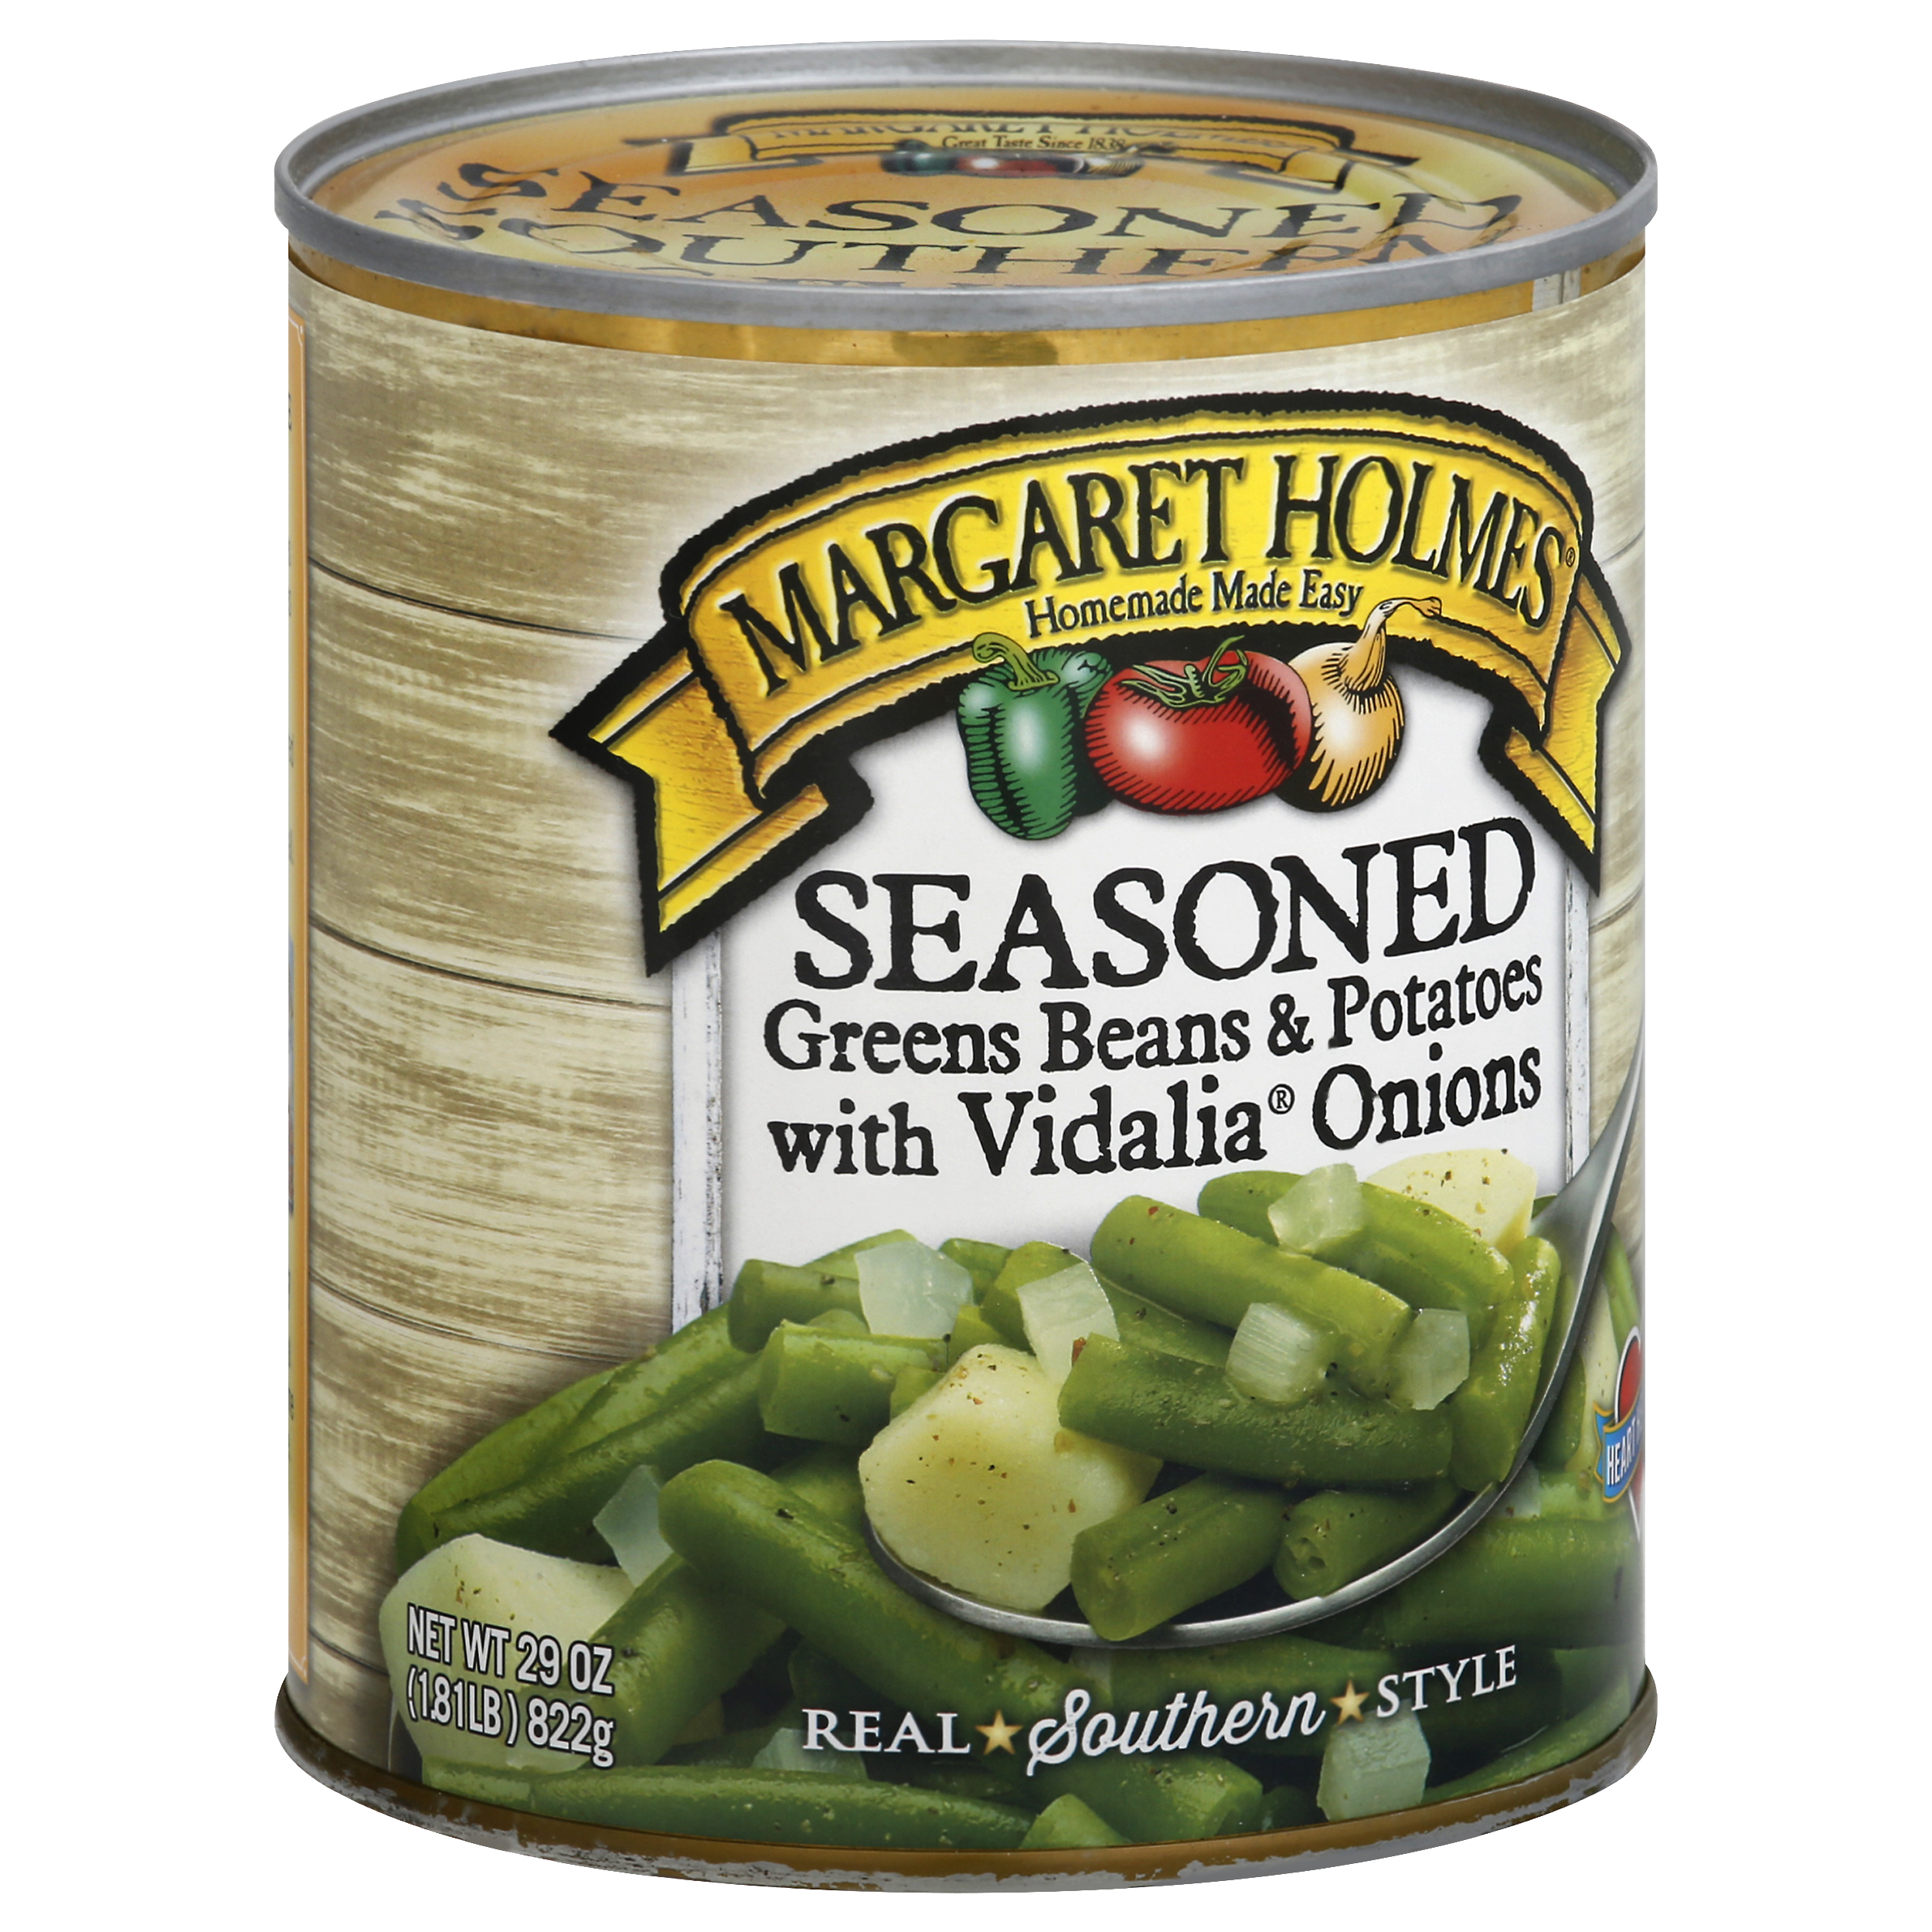 Margaret Holmes Seasoned Green Beans & Potatoes with Vidalia